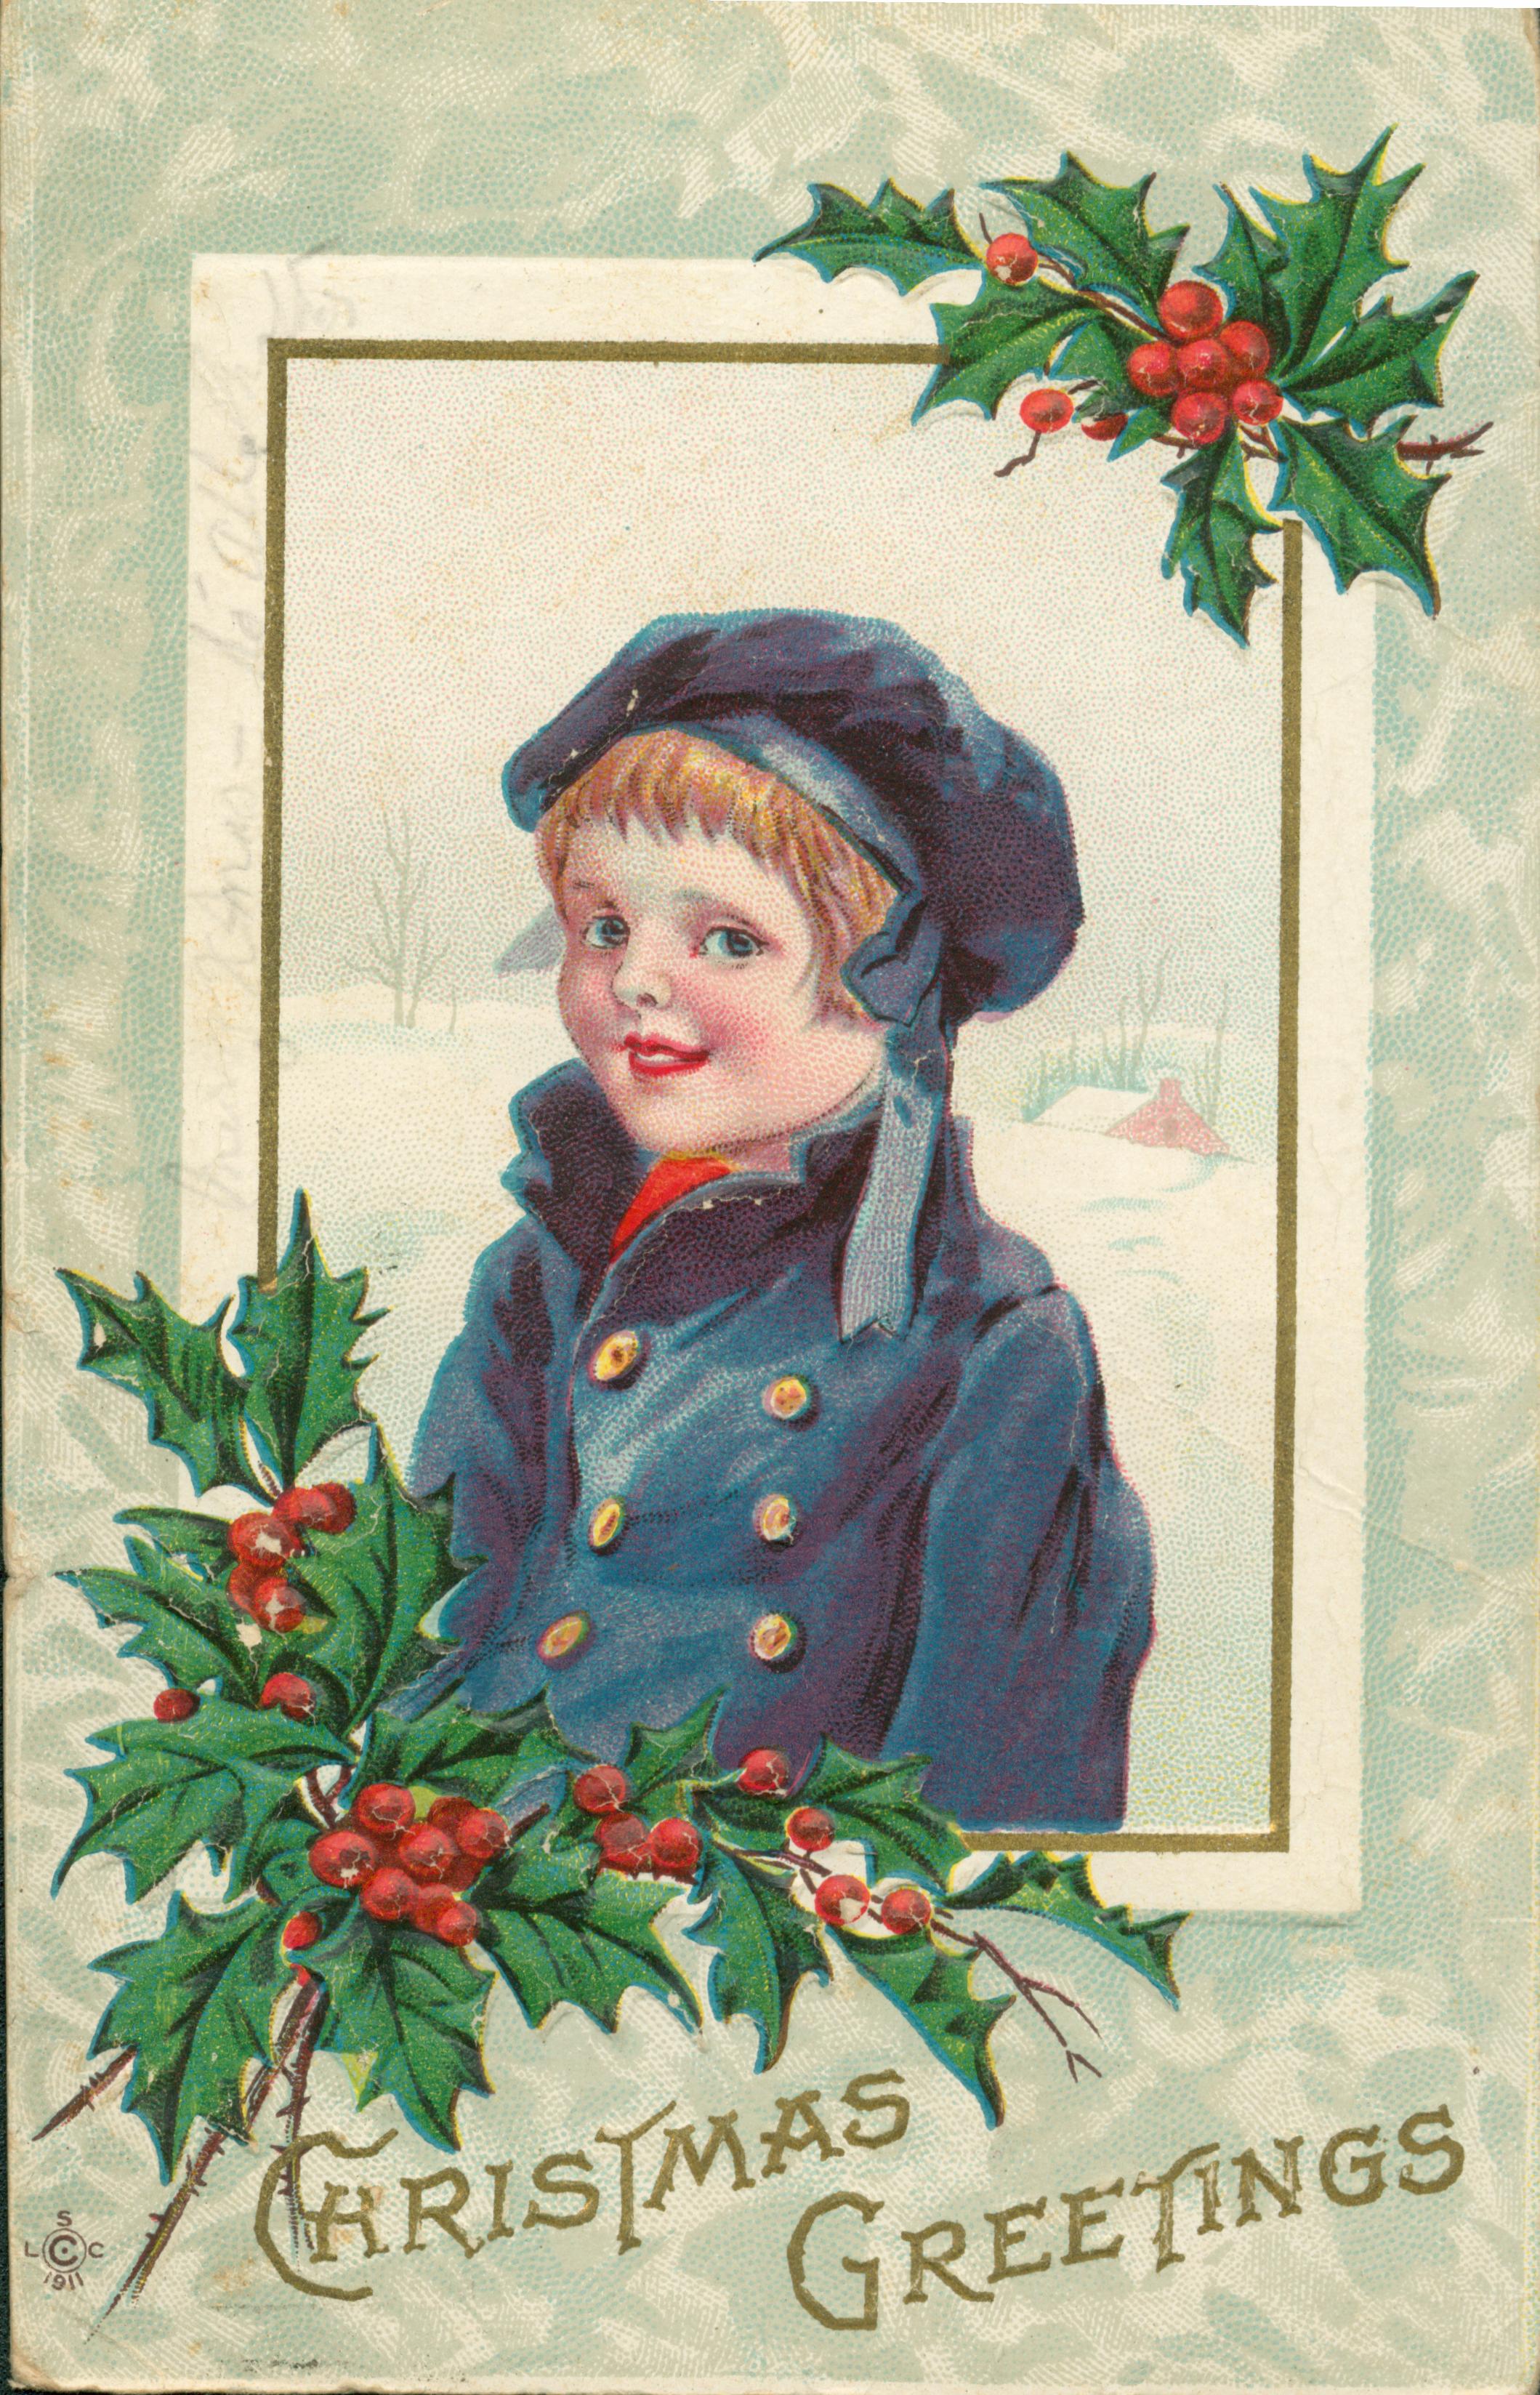 Shows a boy in a snowy scene framed by holly